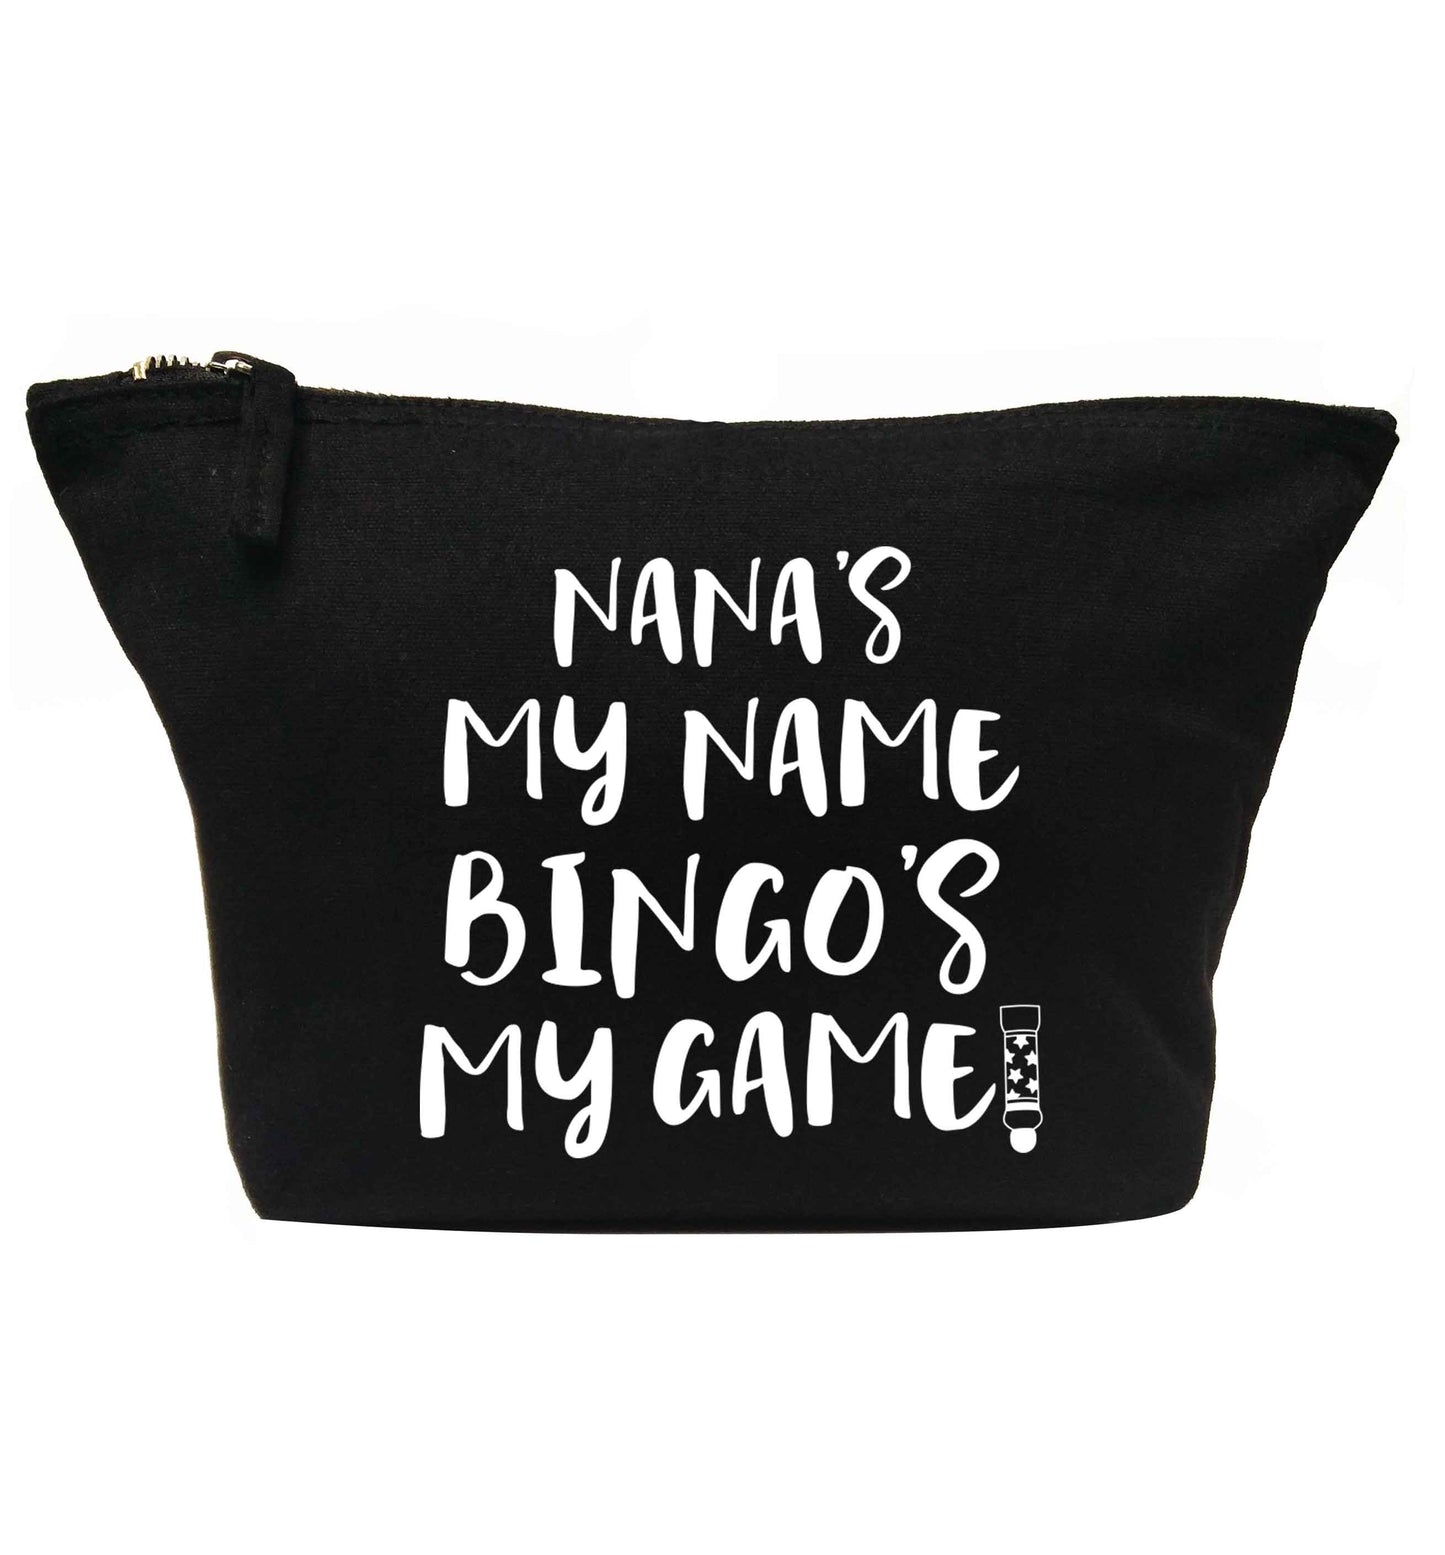 Nana's my name bingo's my game! | makeup / wash bag